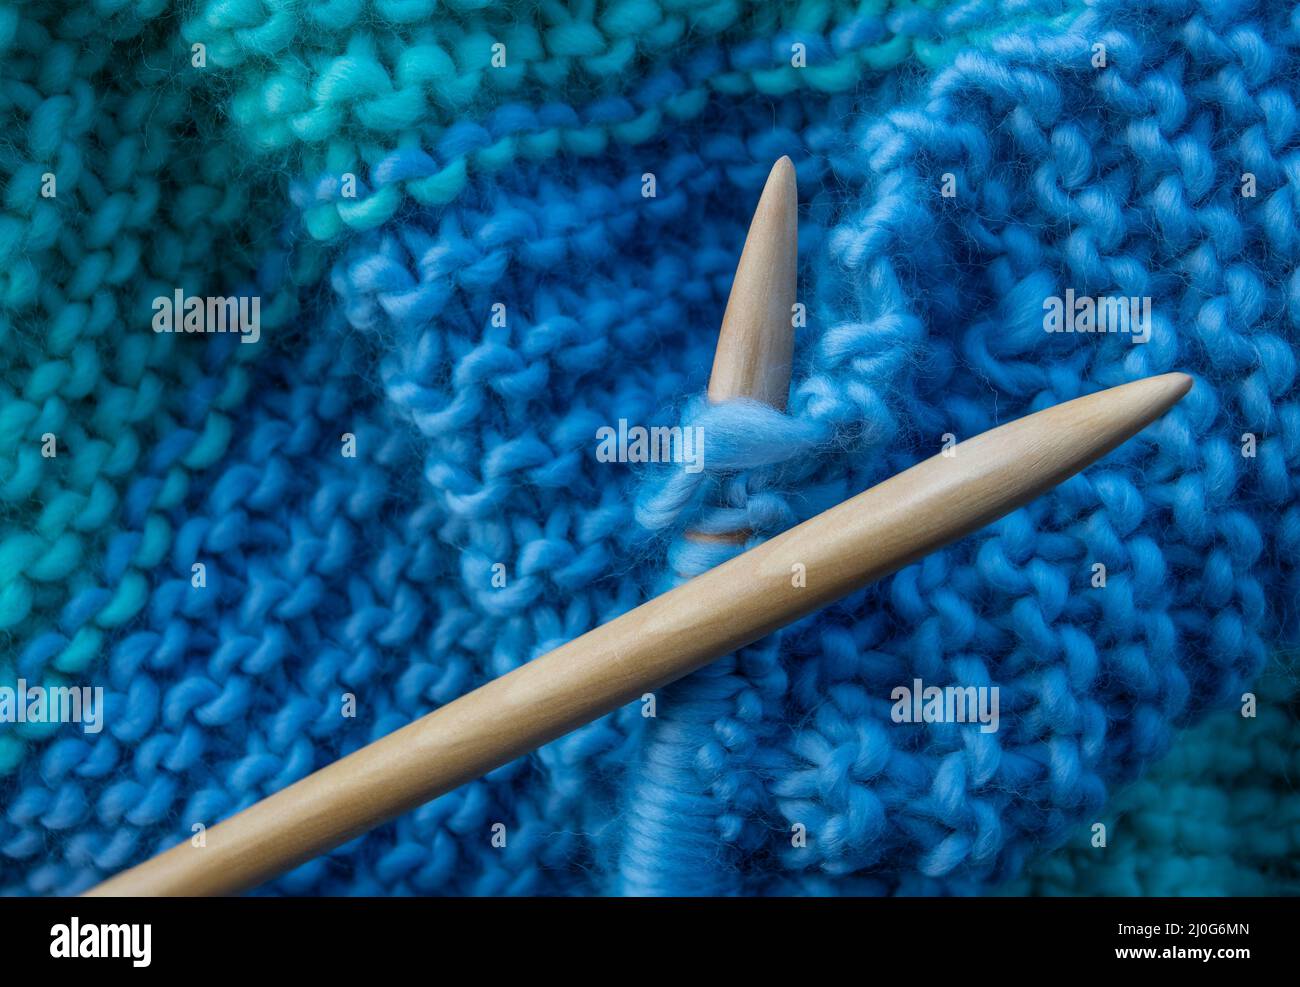 Wooden Knitting Needles And Yarn Stock Photo